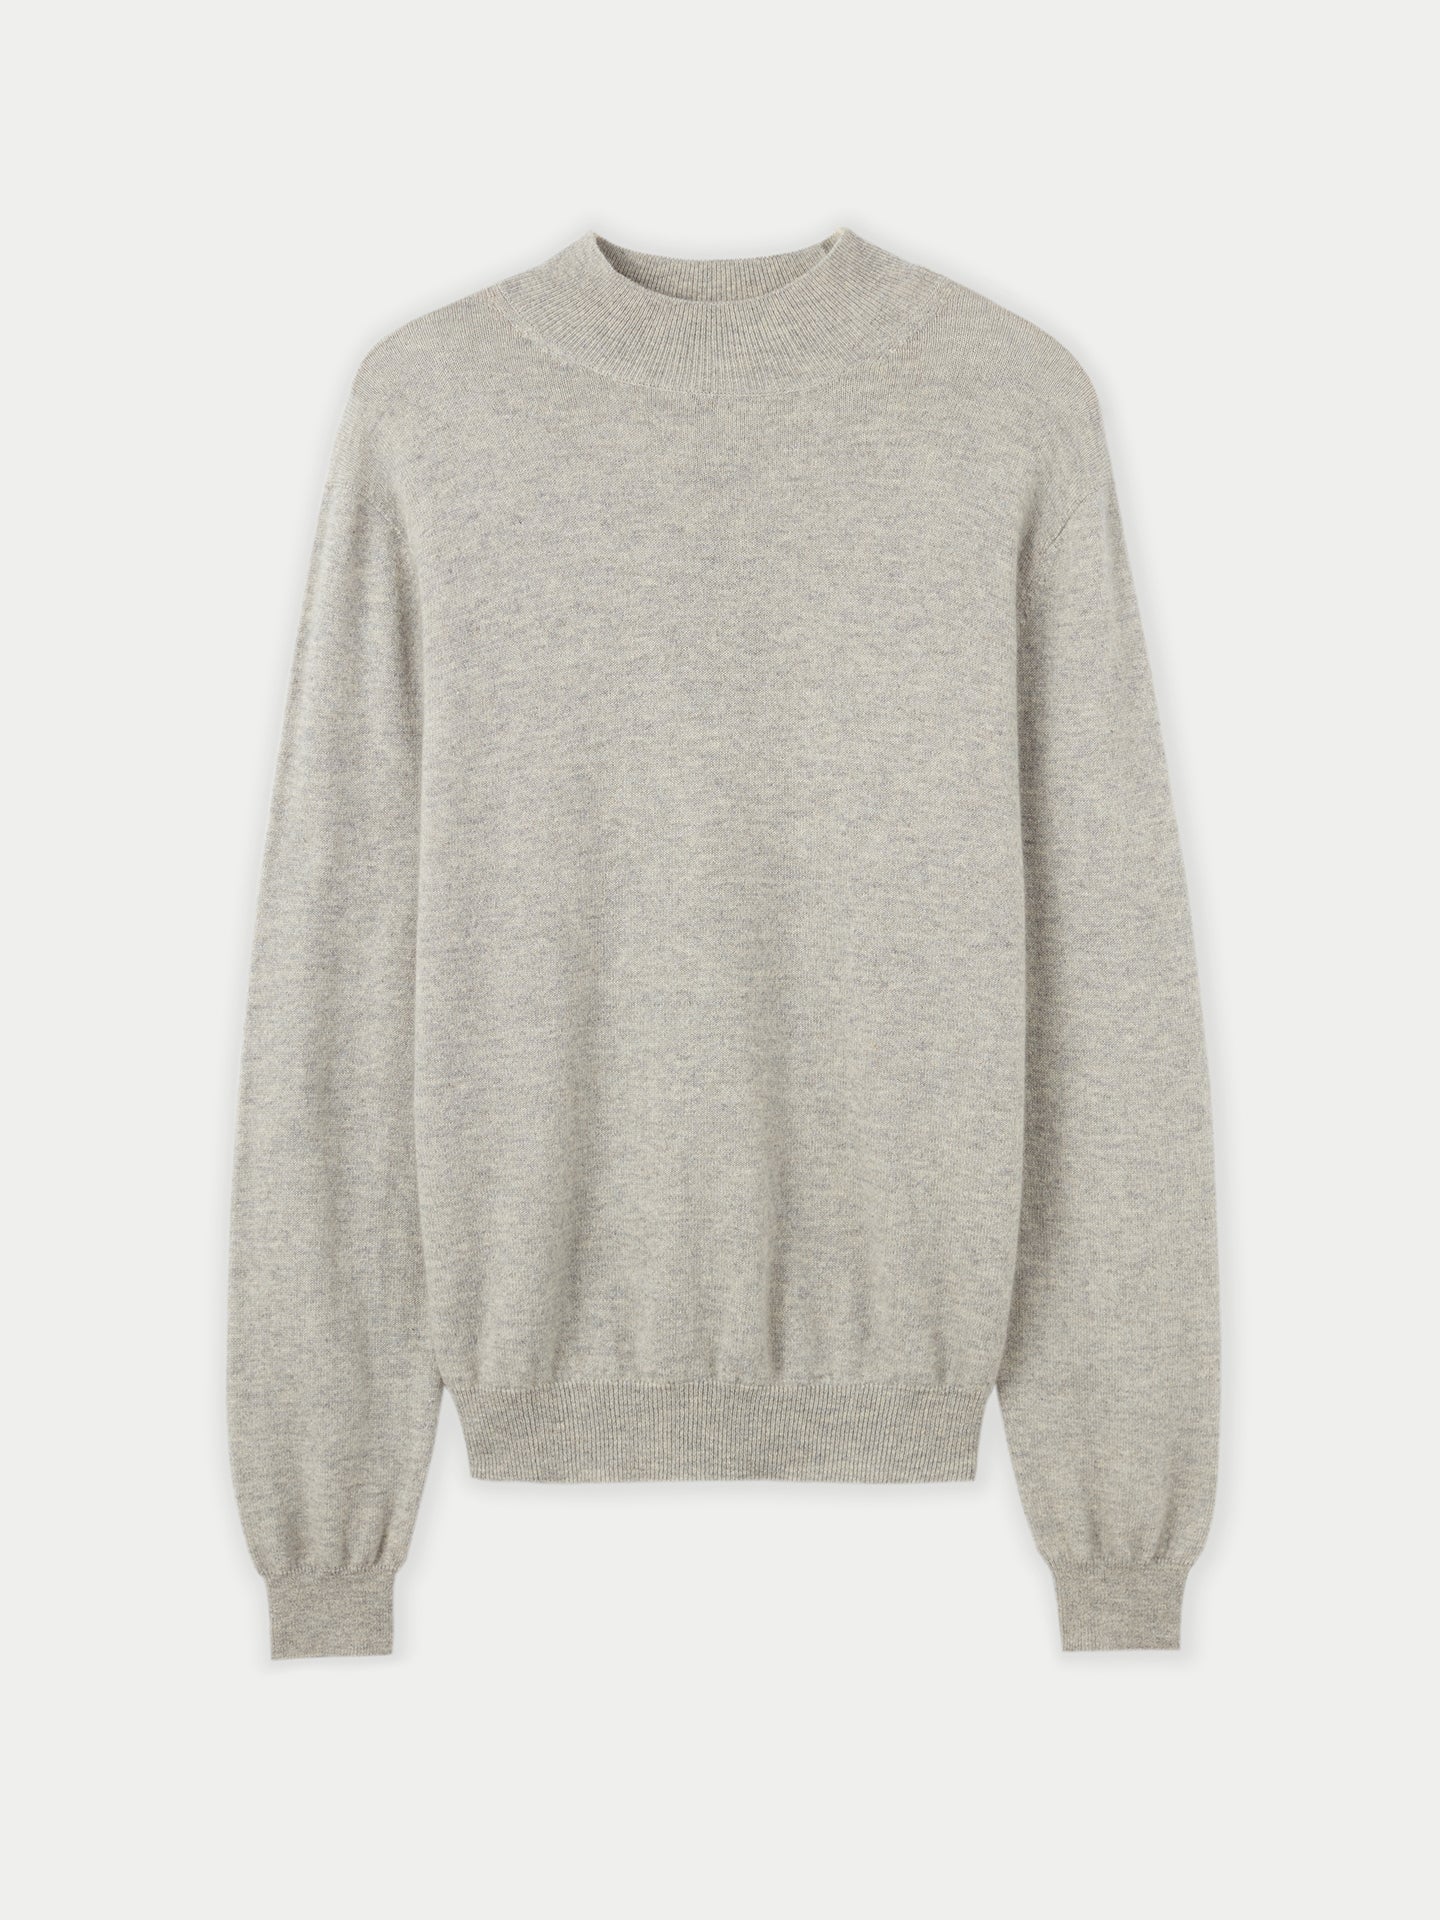 Men's Cashmere Mock Neck Sweater Gray - Gobi Cashmere